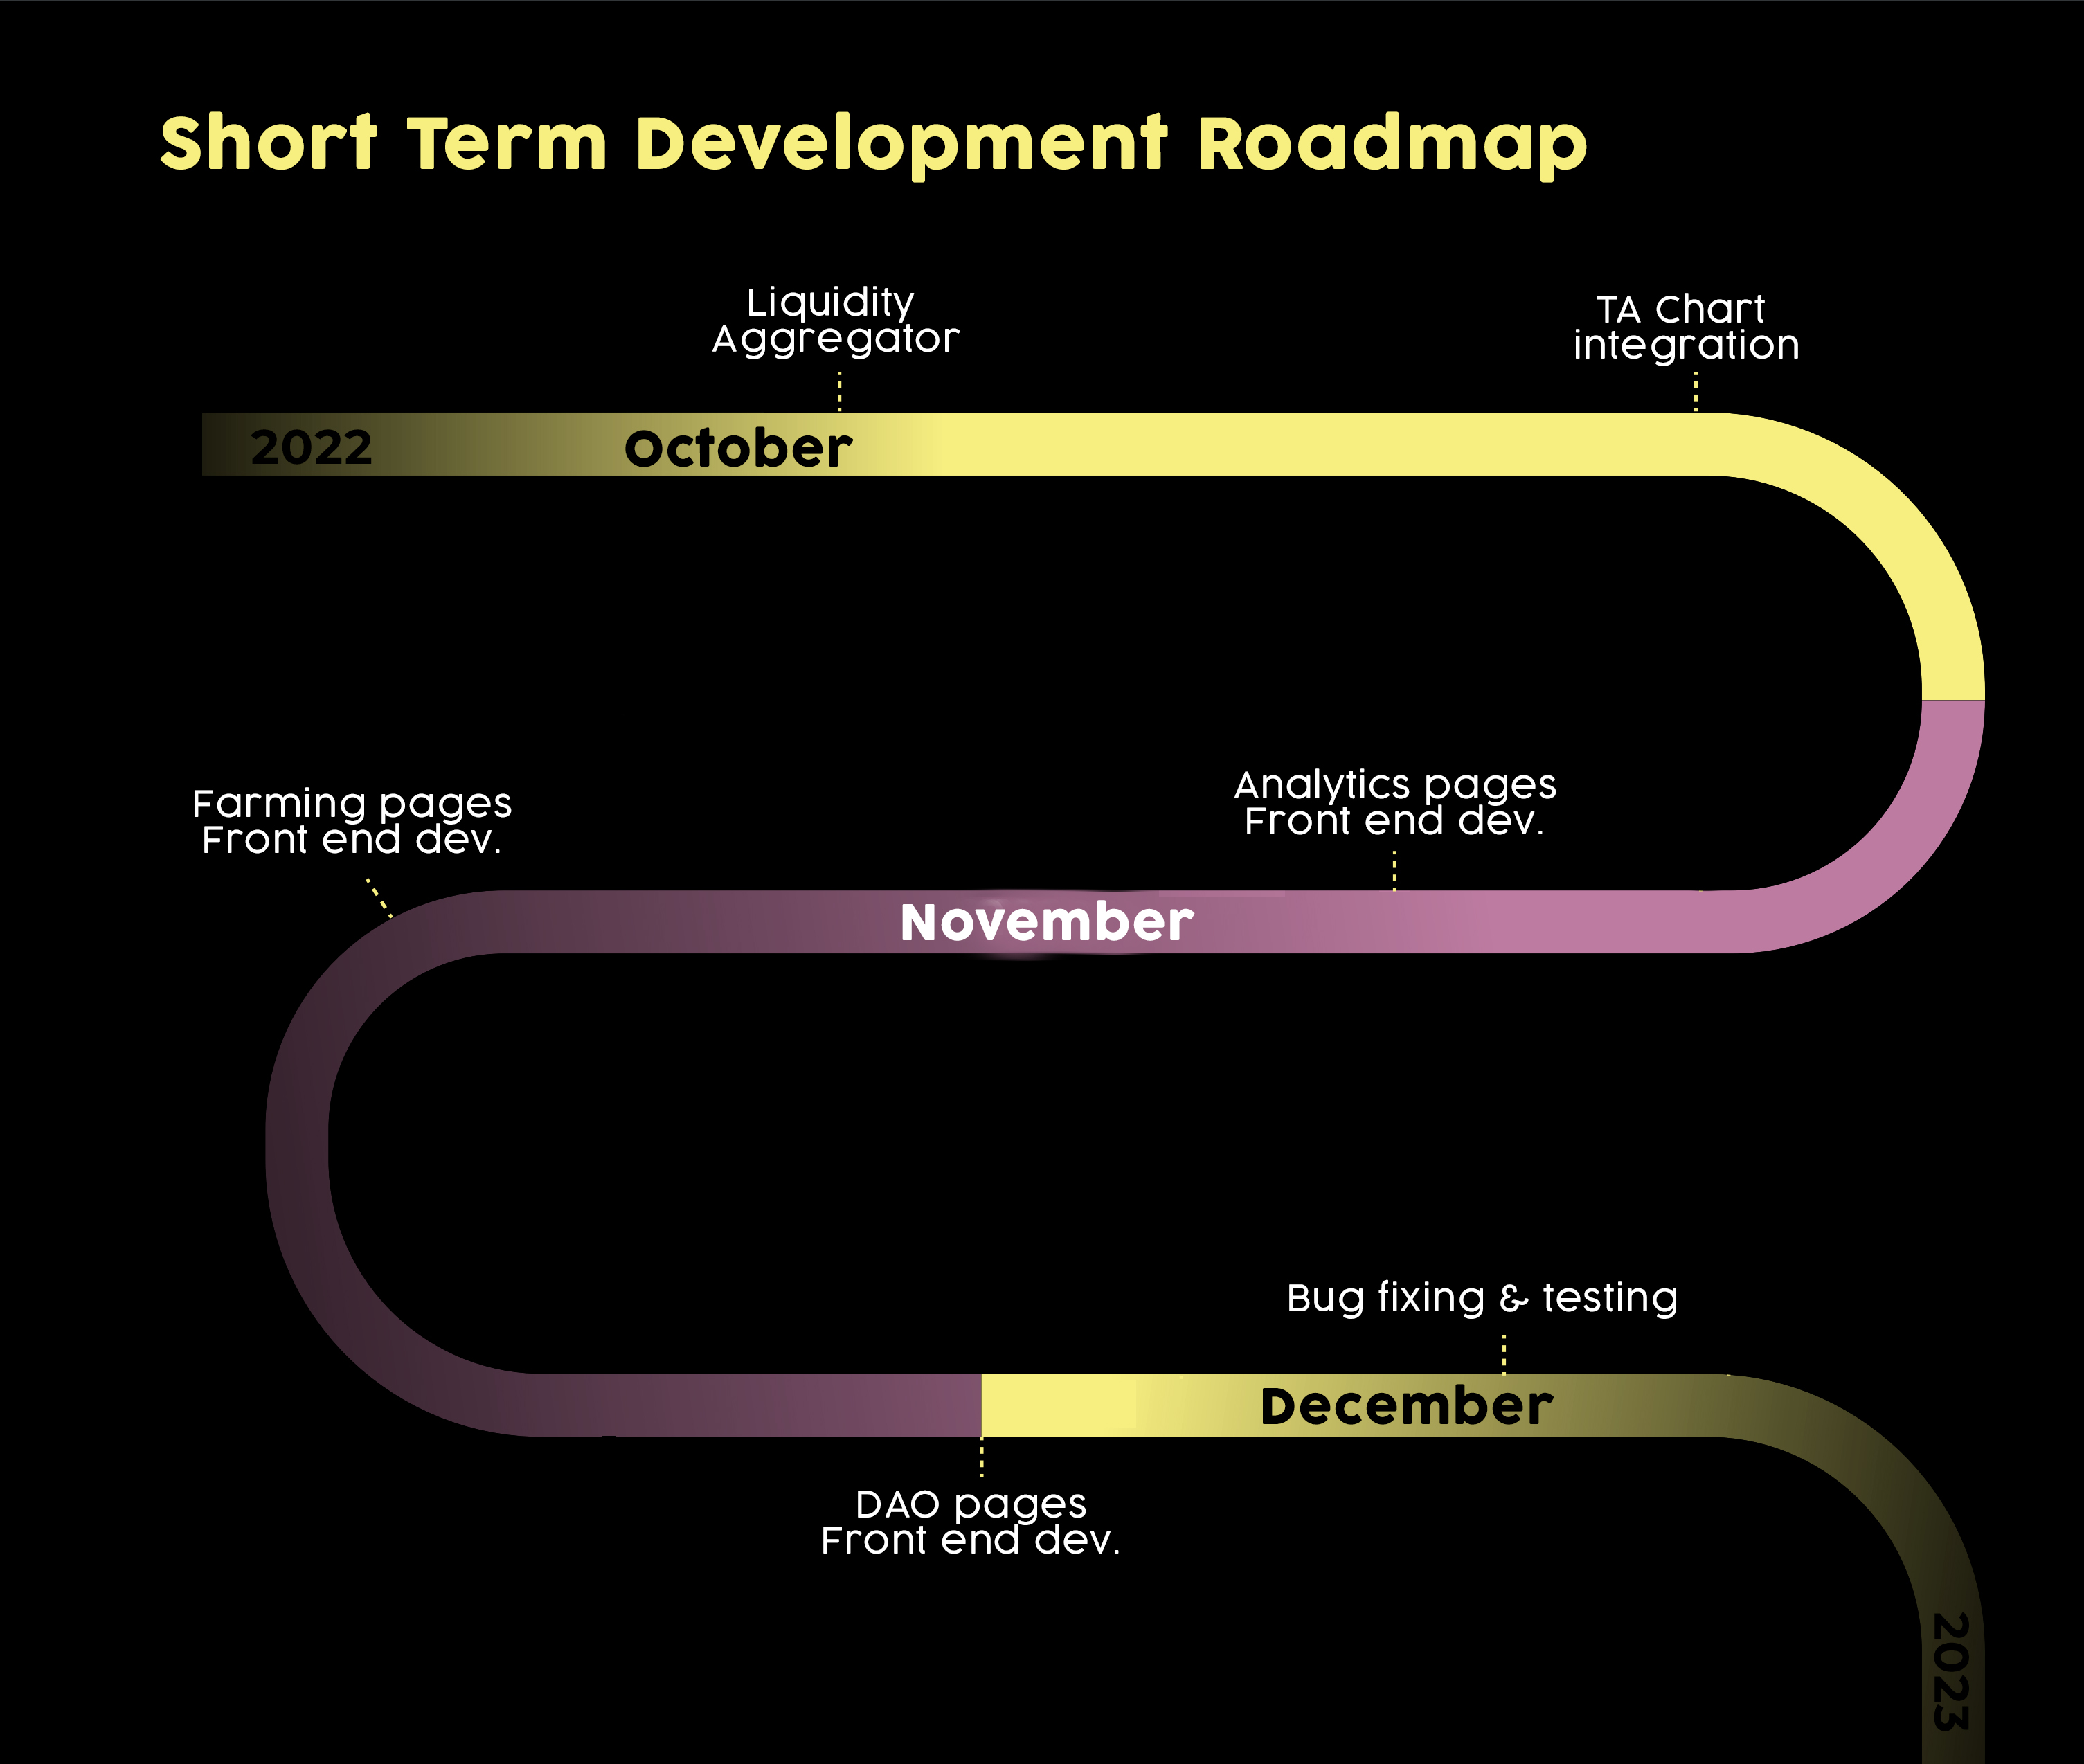 Short Term development roadmap for Acta Finance.